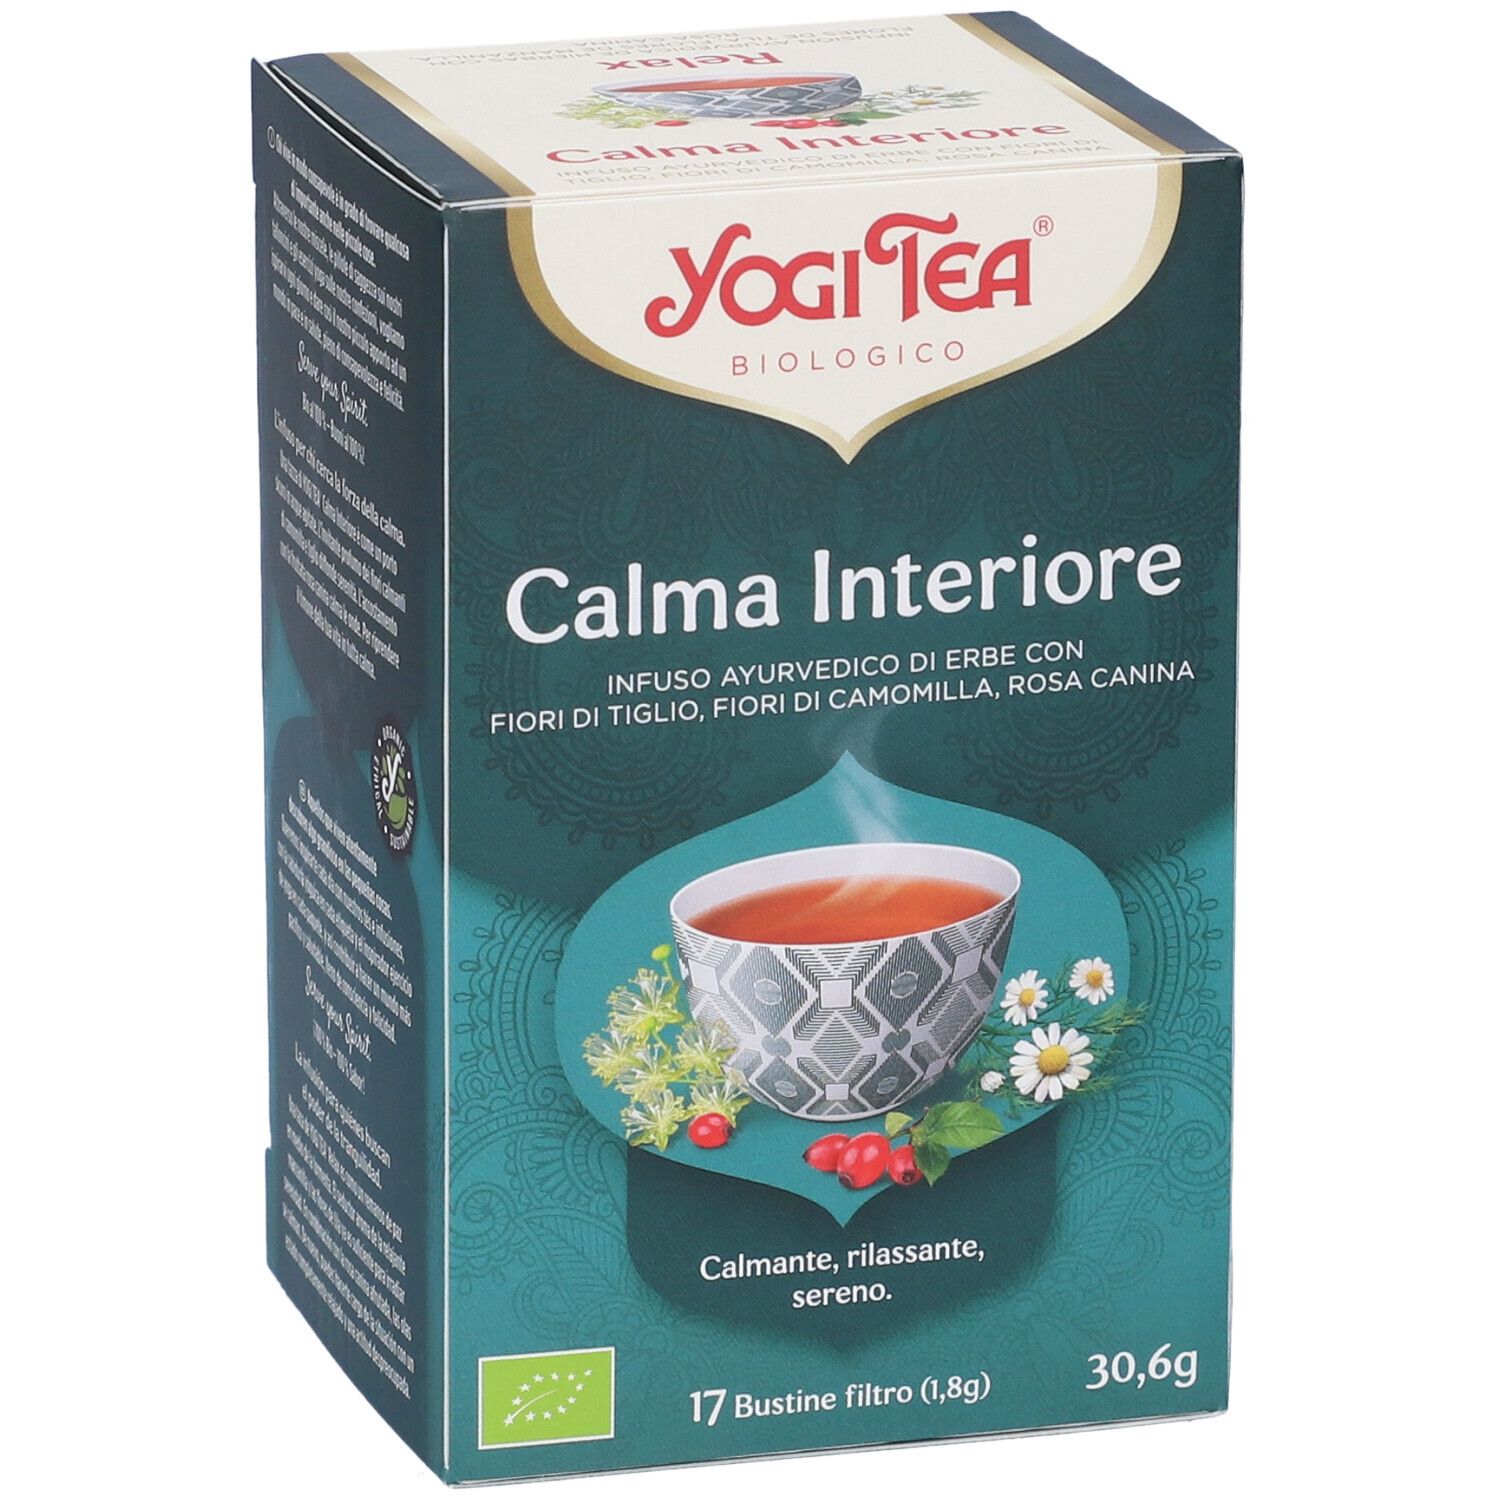 Yogi Tea Calma Inter Bio 30,6